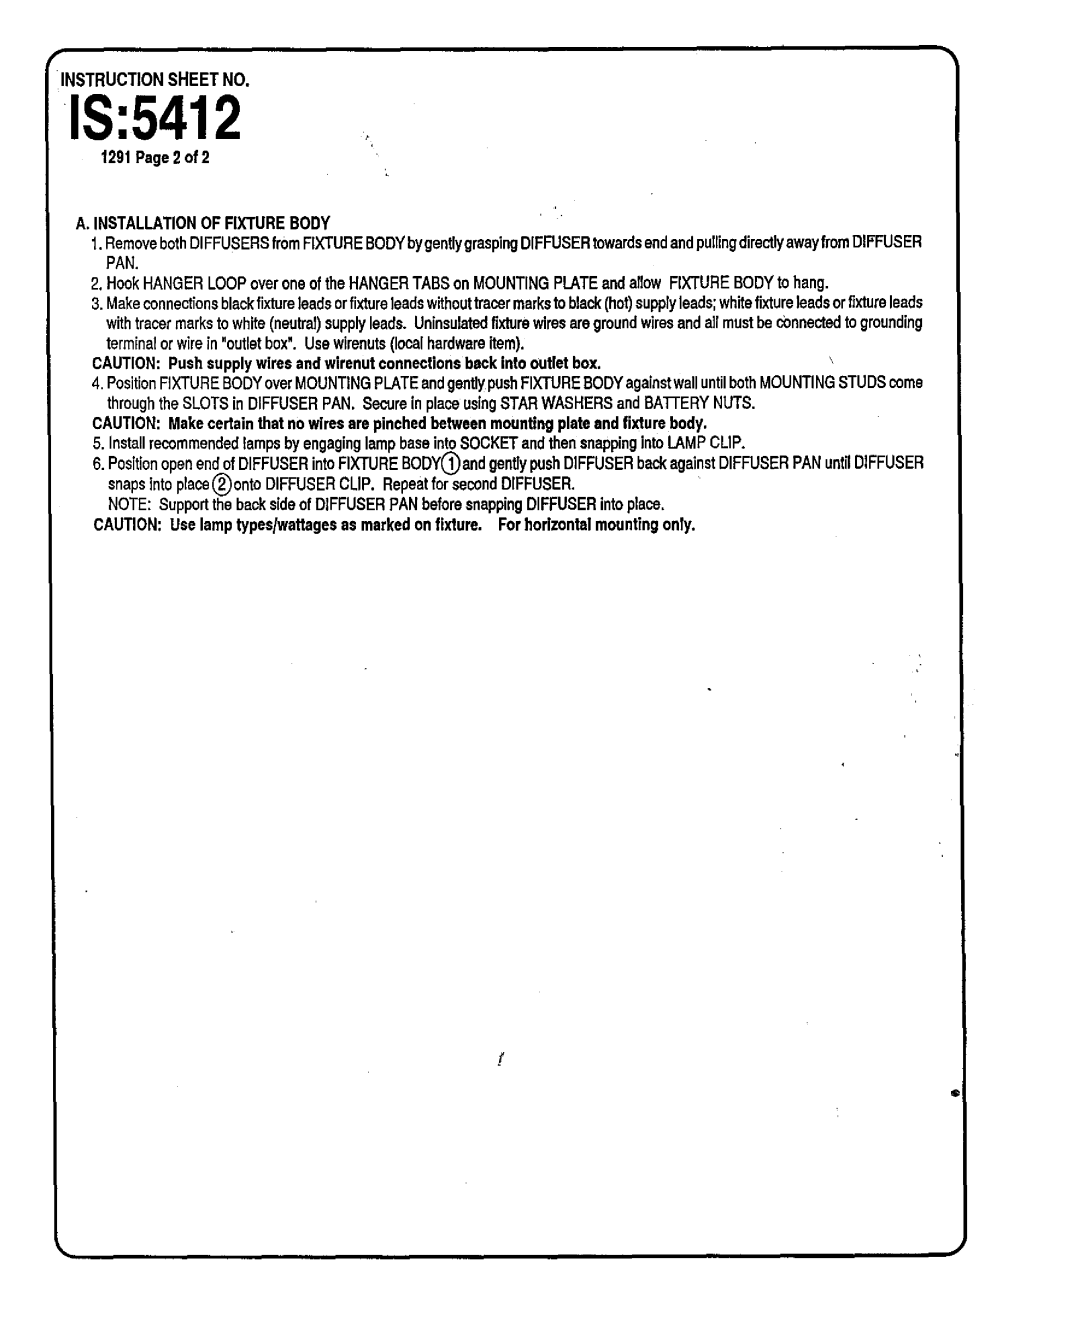 Lightolier 5413 instruction sheet 1S5412, Nstruction Sheet no, Installation of Fixture Body 